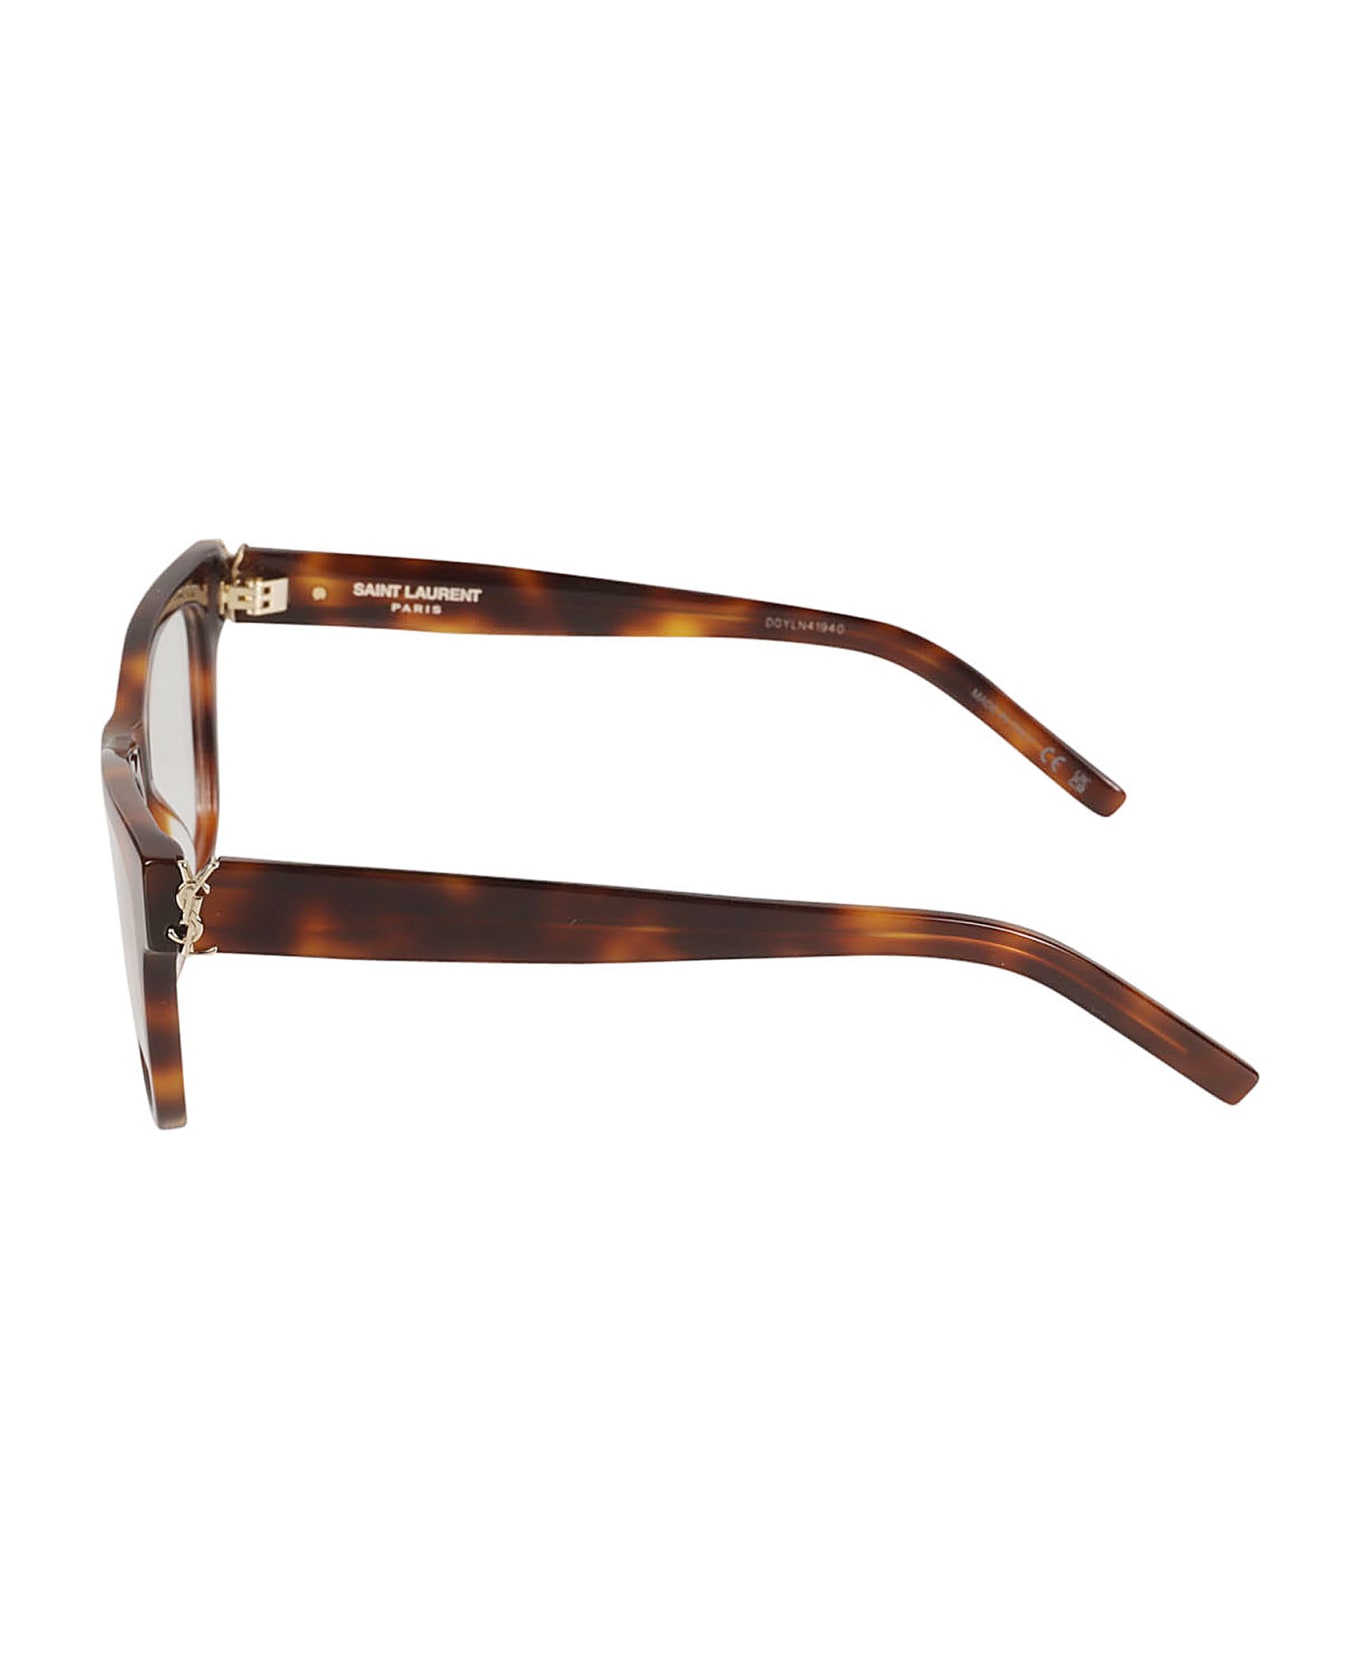 Saint Laurent Eyewear Ysl Hinge Square Frame Glasses - Havana/Transparent